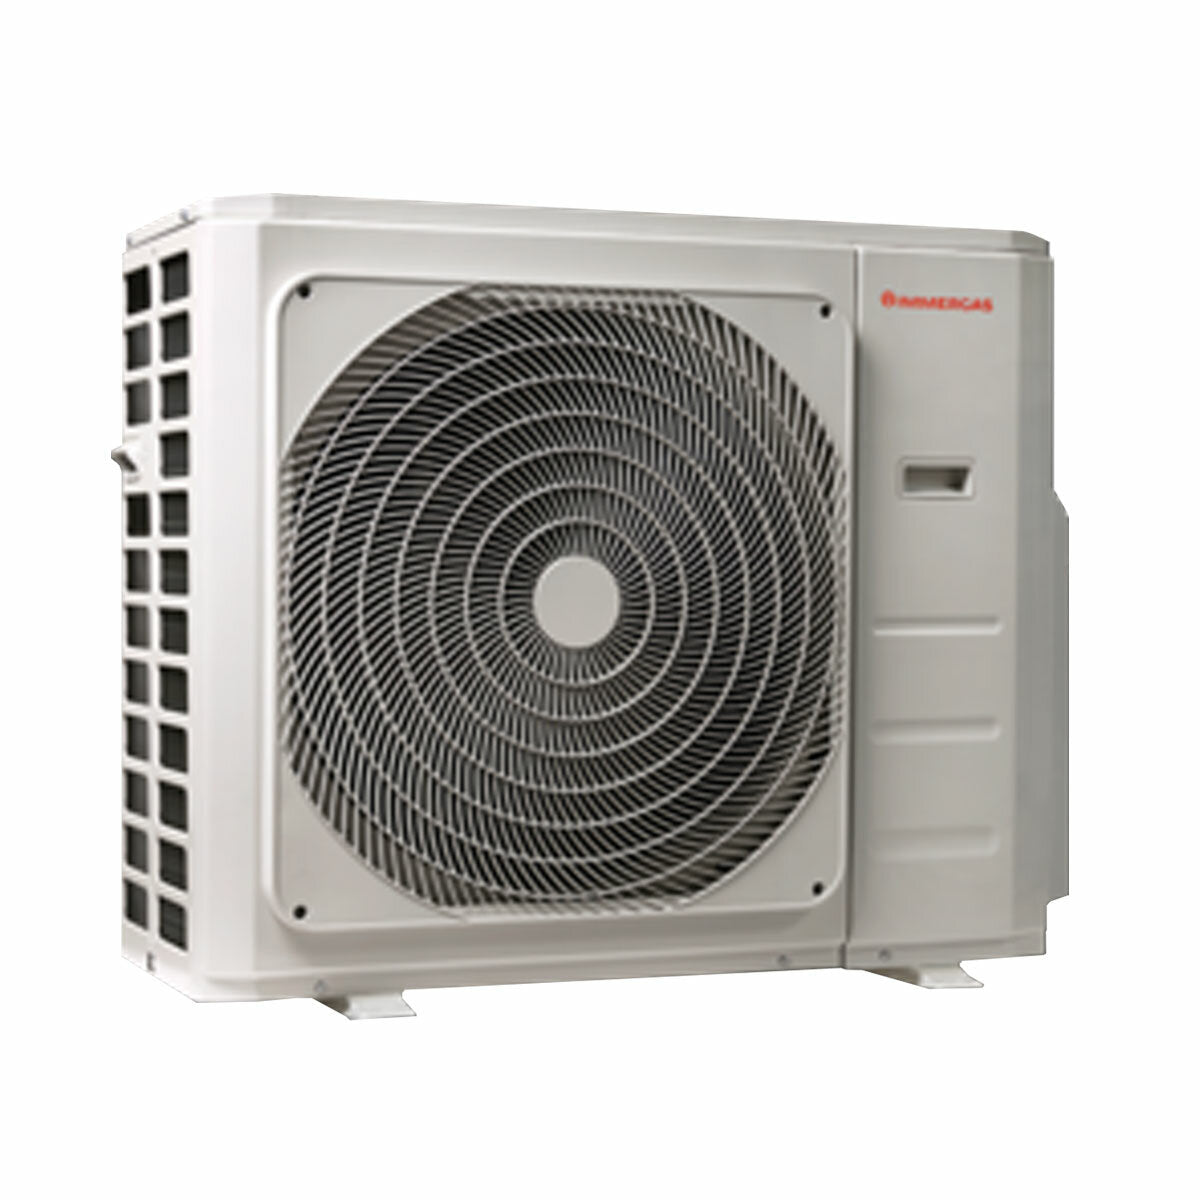 Immergas THOR trial split air conditioner 9000+12000+12000 BTU inverter A++ external unit 7.9 kW